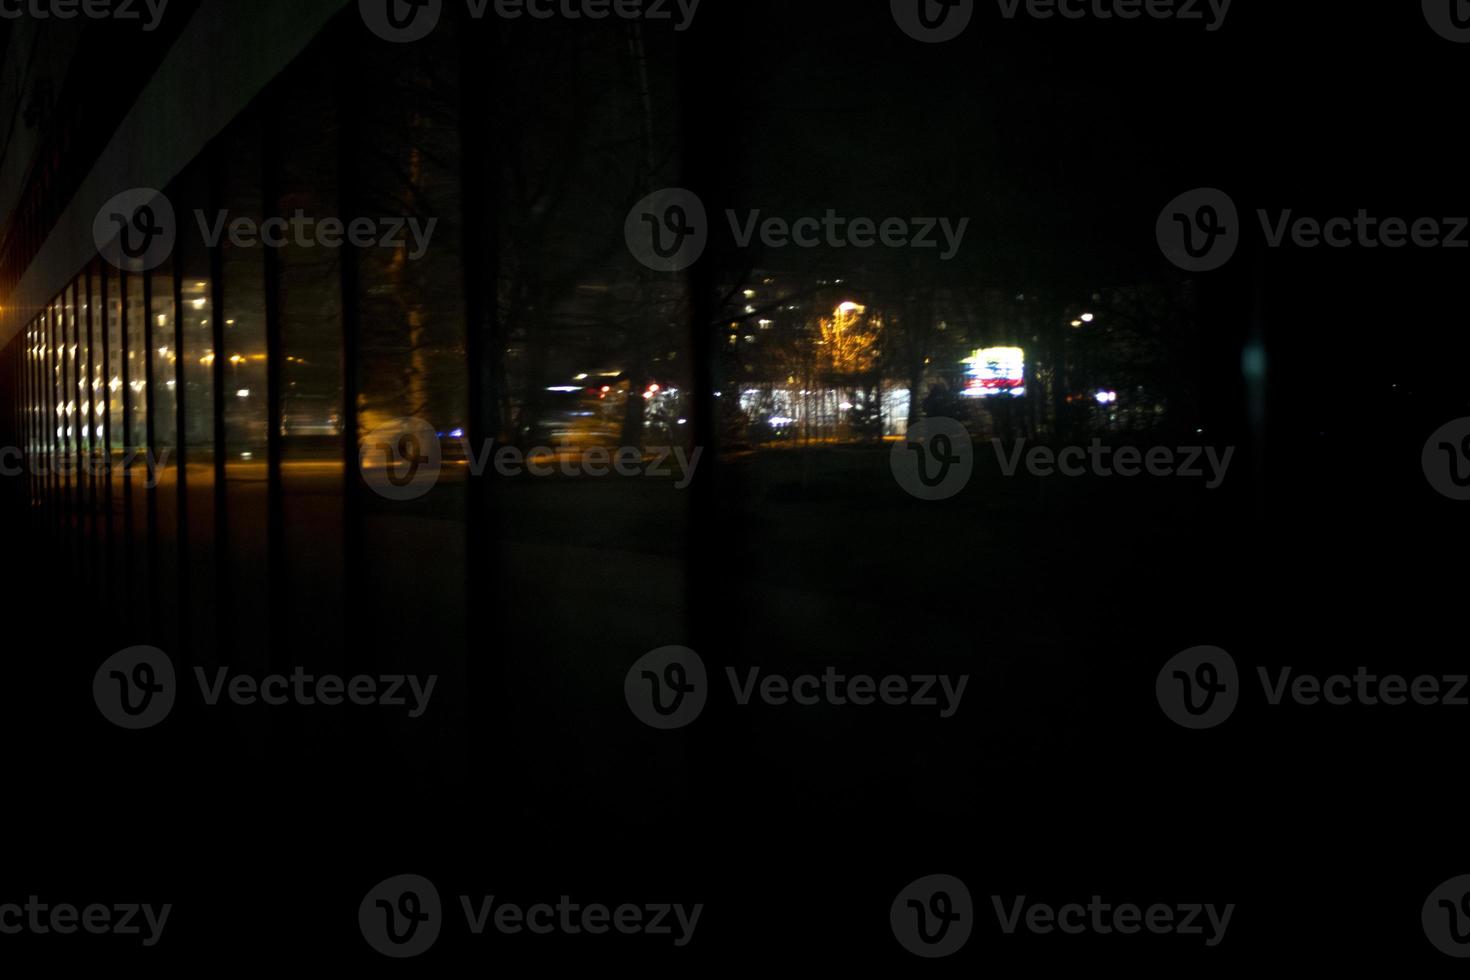 City at night. Car lights in dark. photo